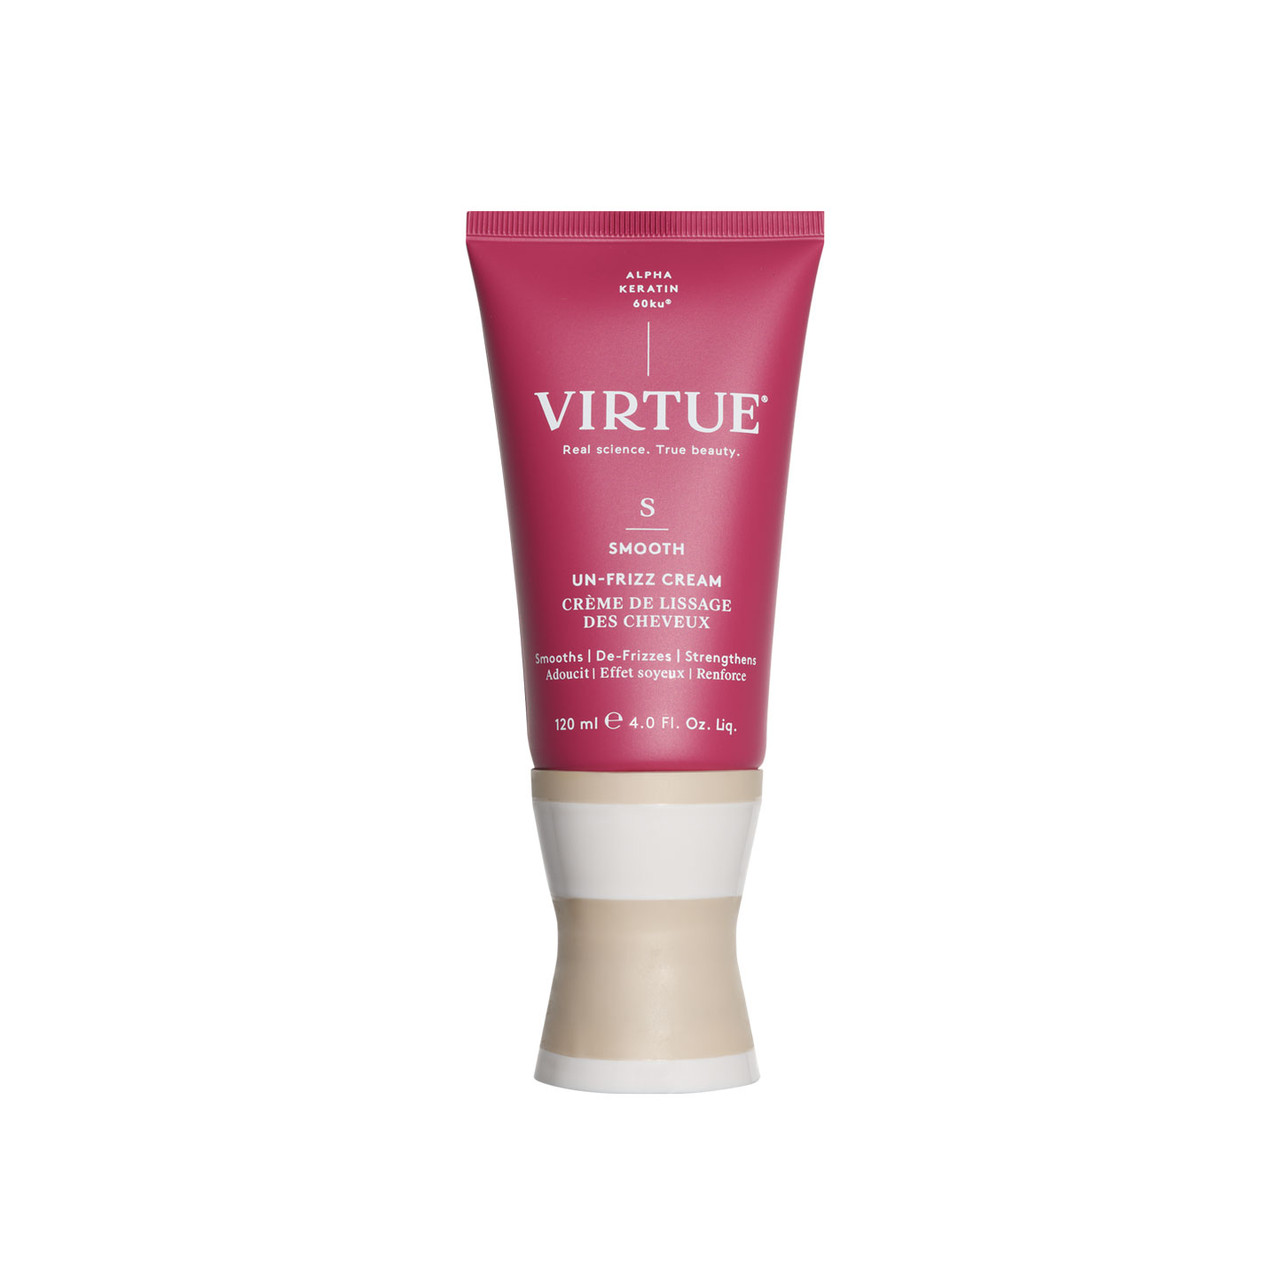 Virtue Smooth Un-Frizz Cream 120ml